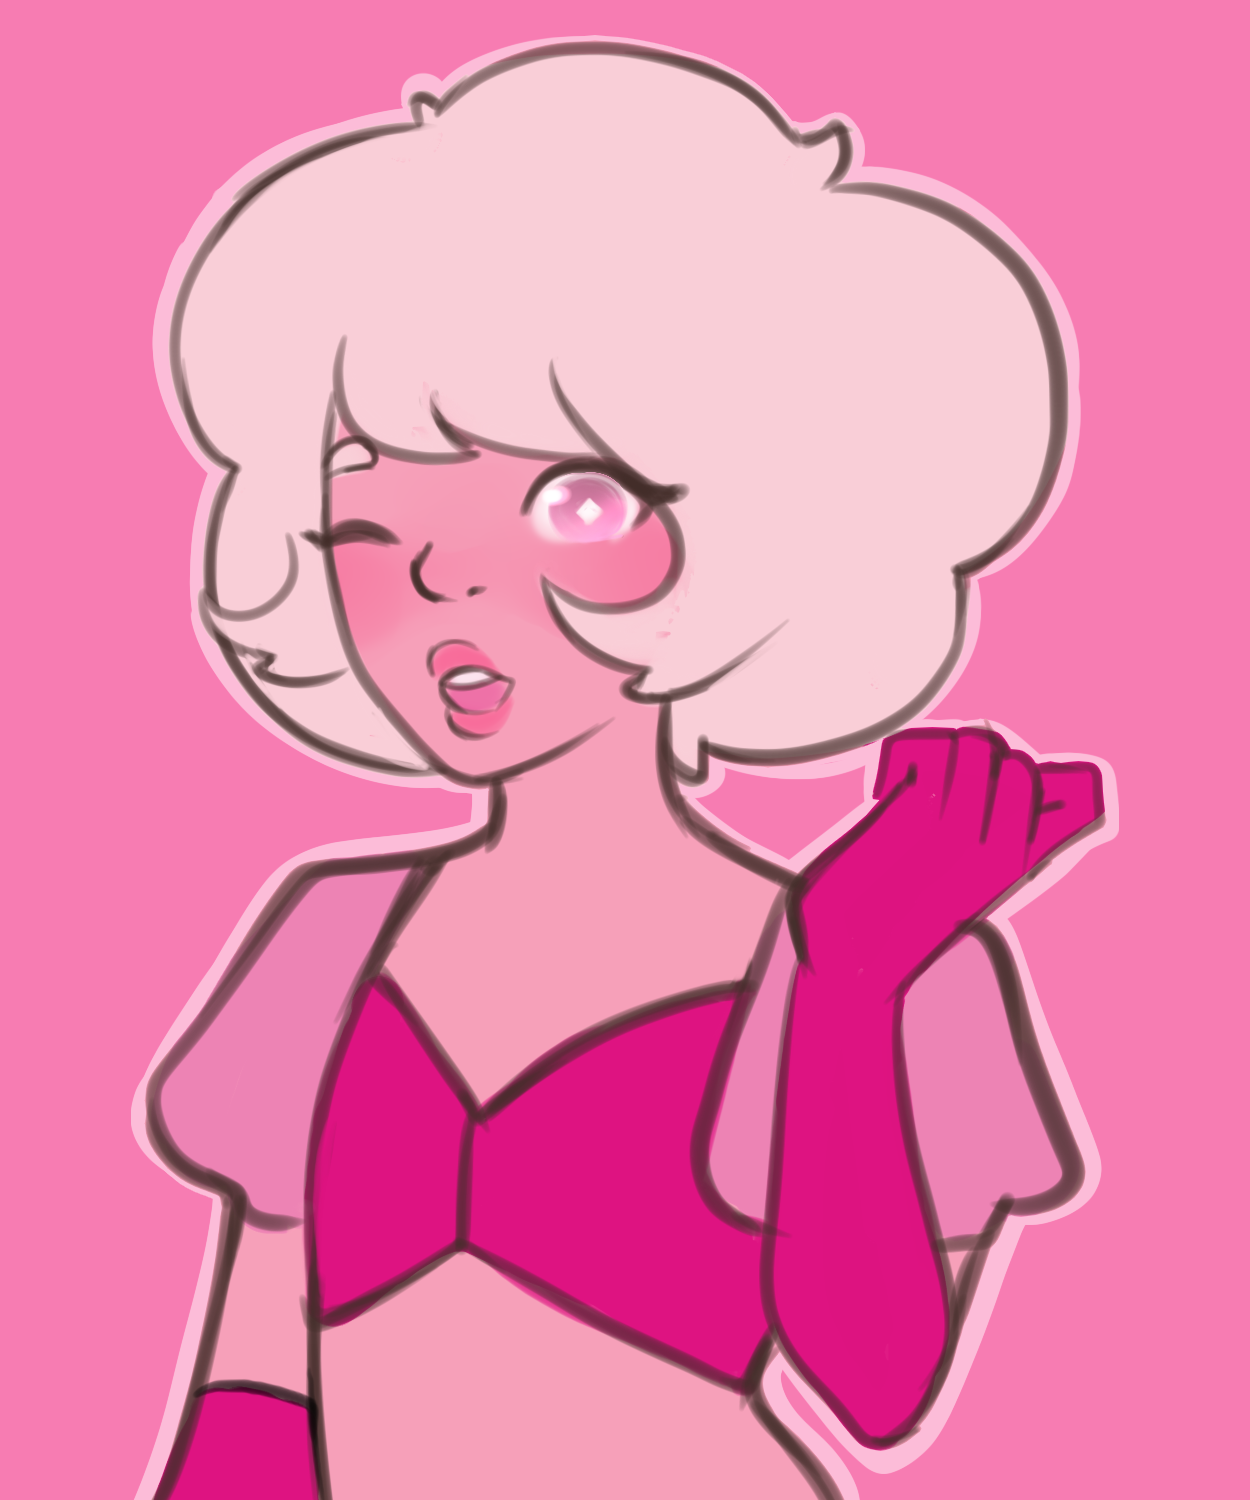 Pink Diamond! She has a pretty cute design.